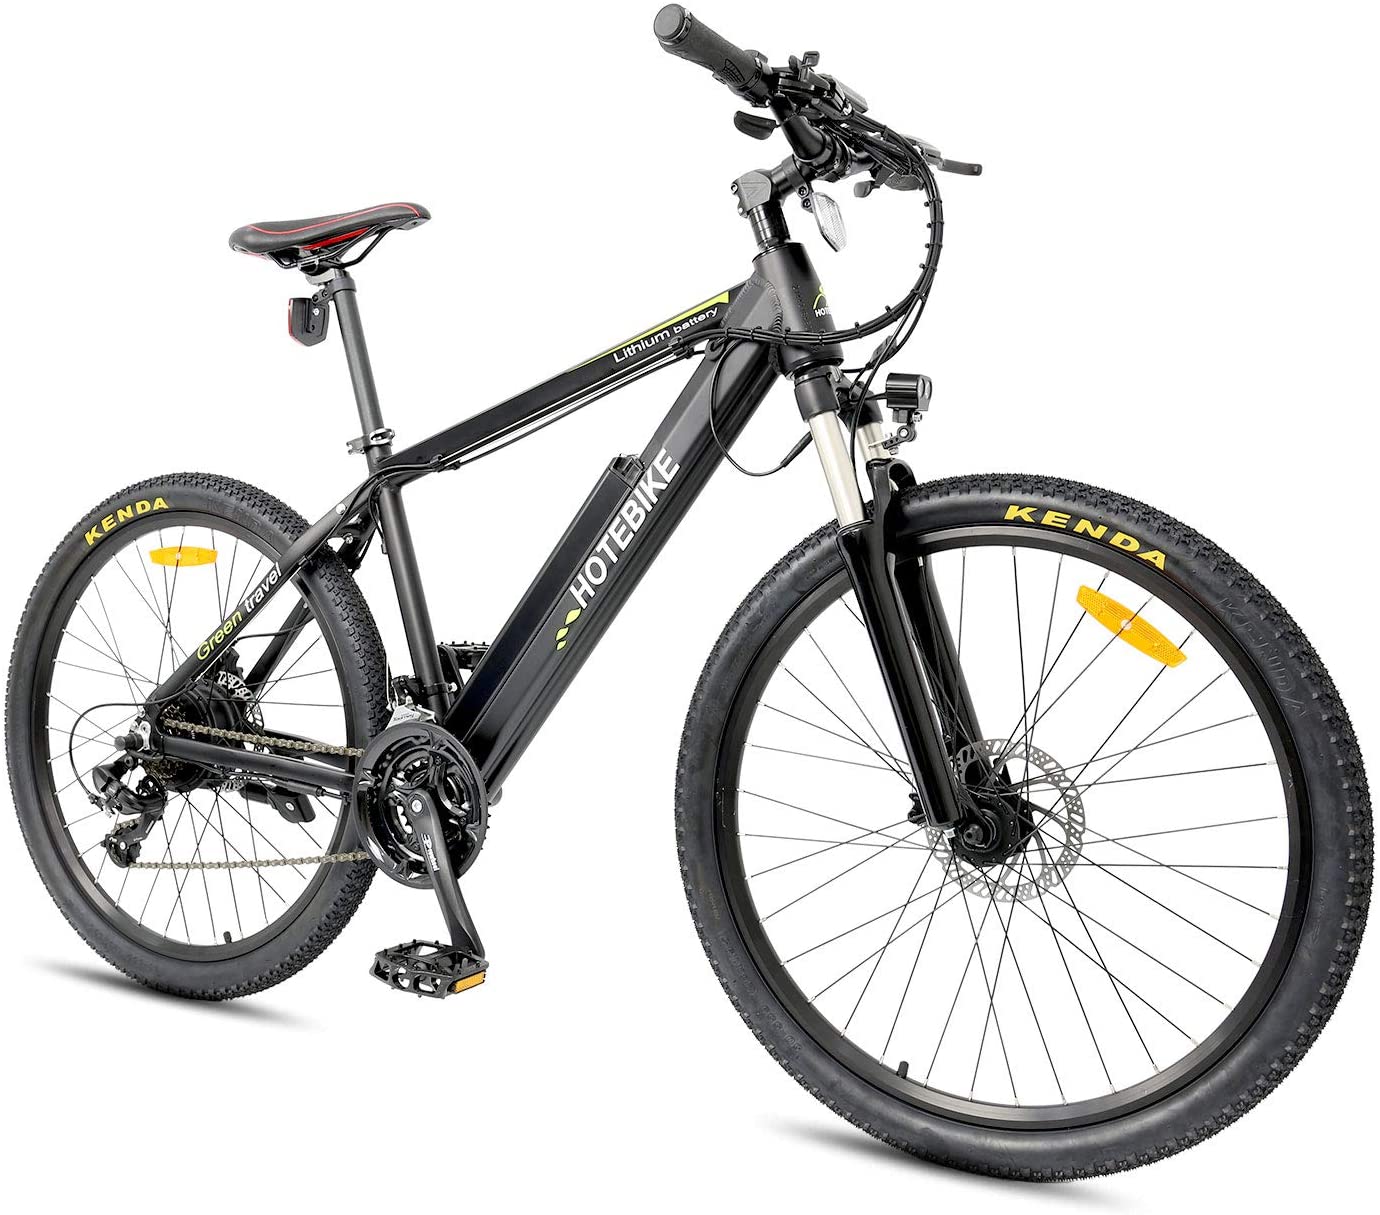 Trek electric bike,HOTEBIKE electric bicycle,Trek pedal-assist bikes,Trek bicycle